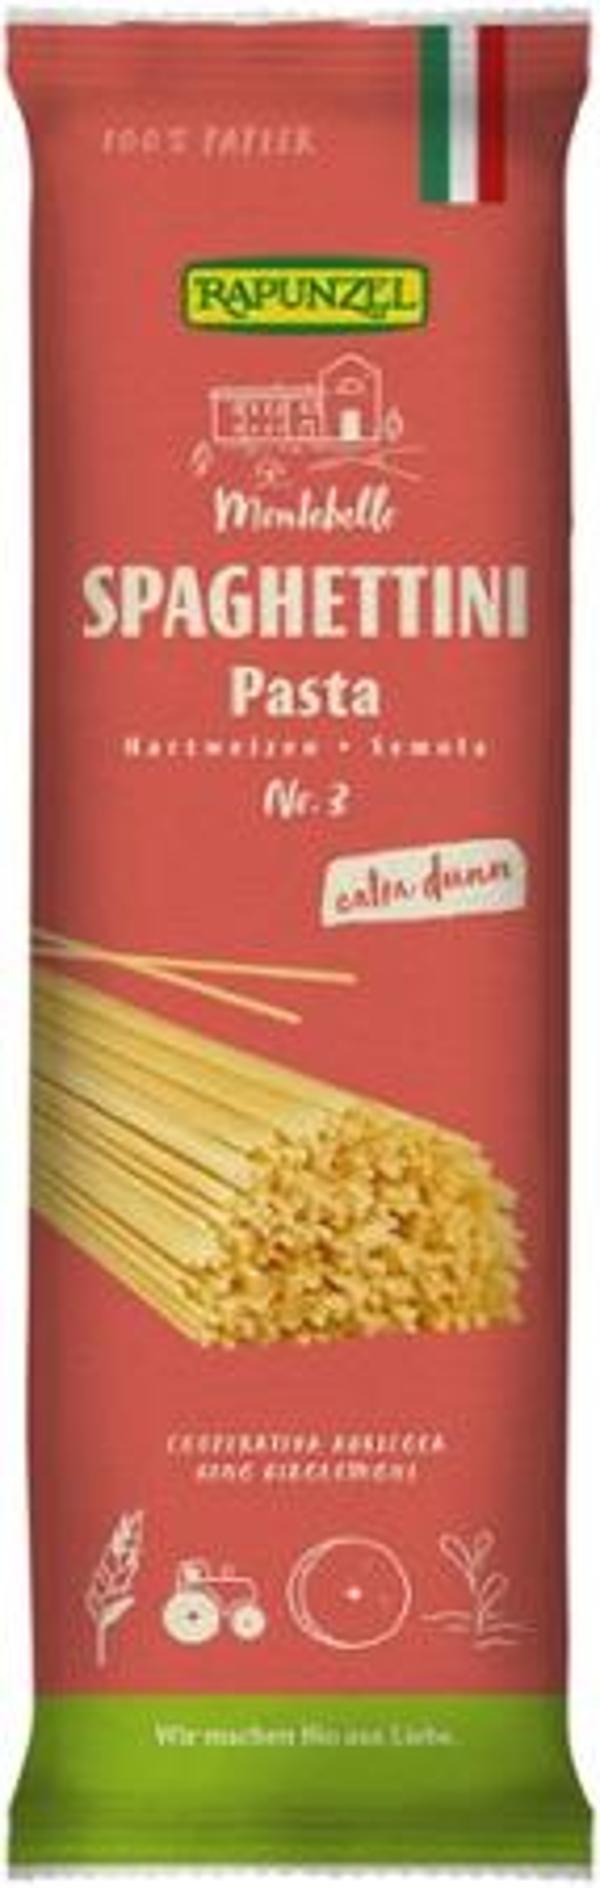 Produktfoto zu Spaghetti semola, extra dünn